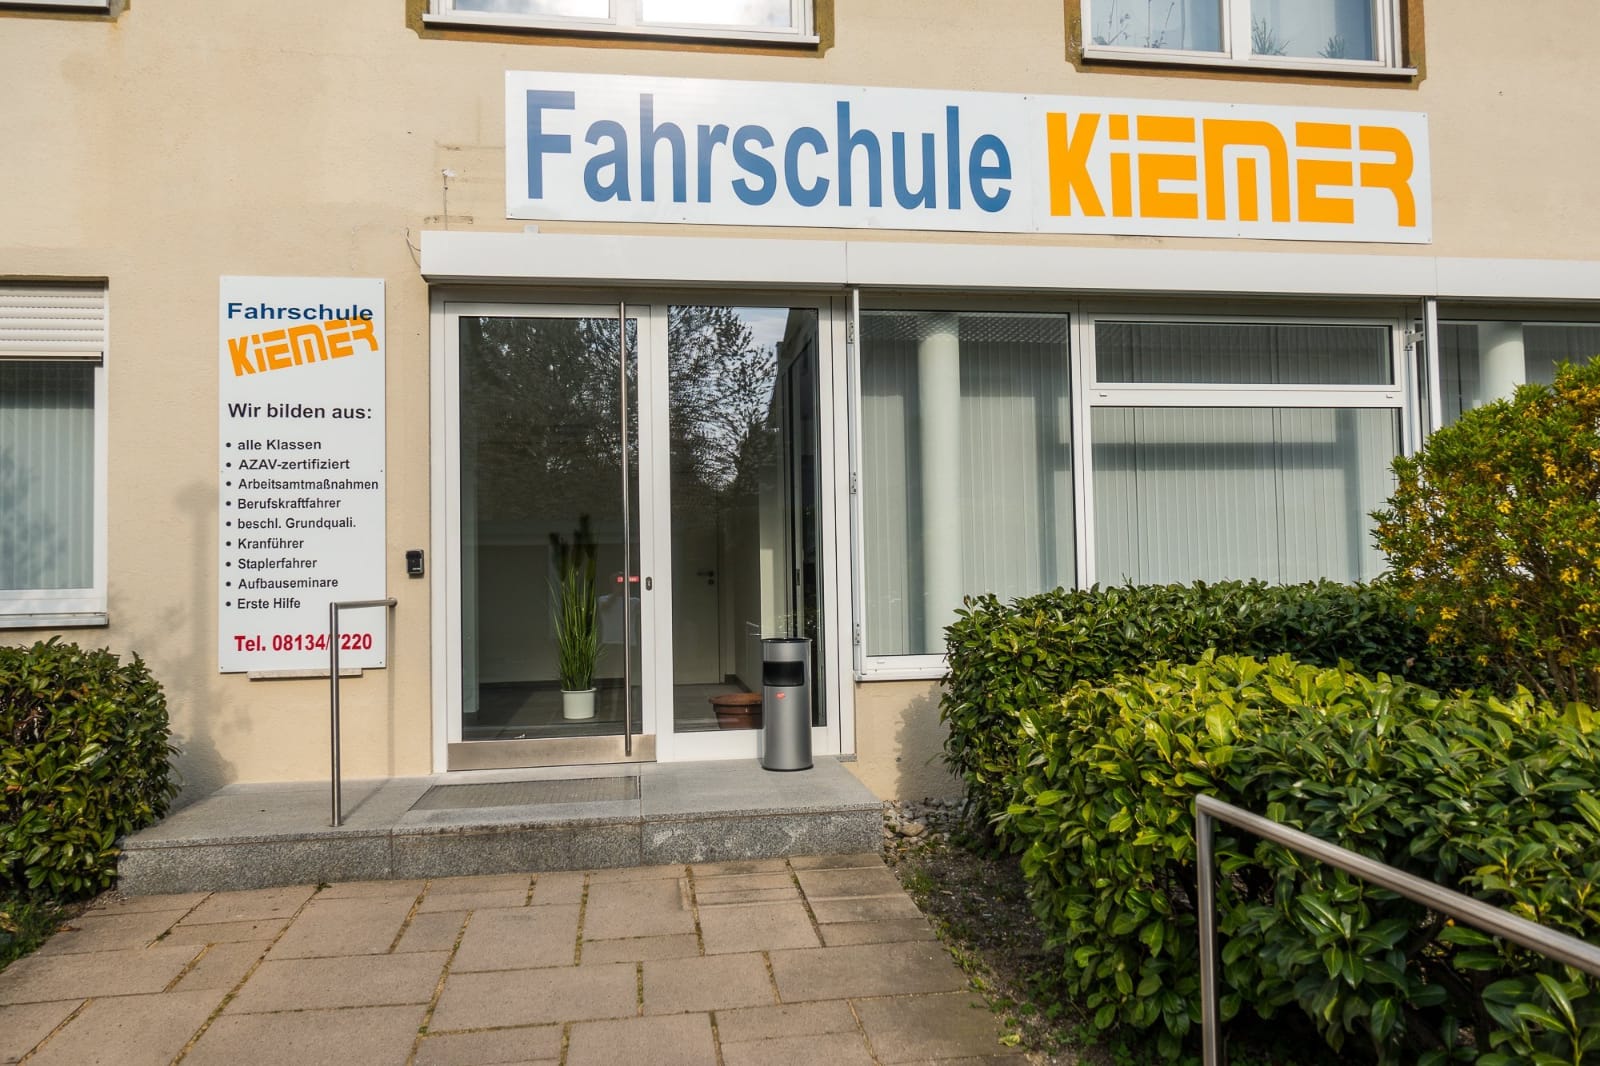 Gebäude der Odelzhausender Fahrschule Kiemer